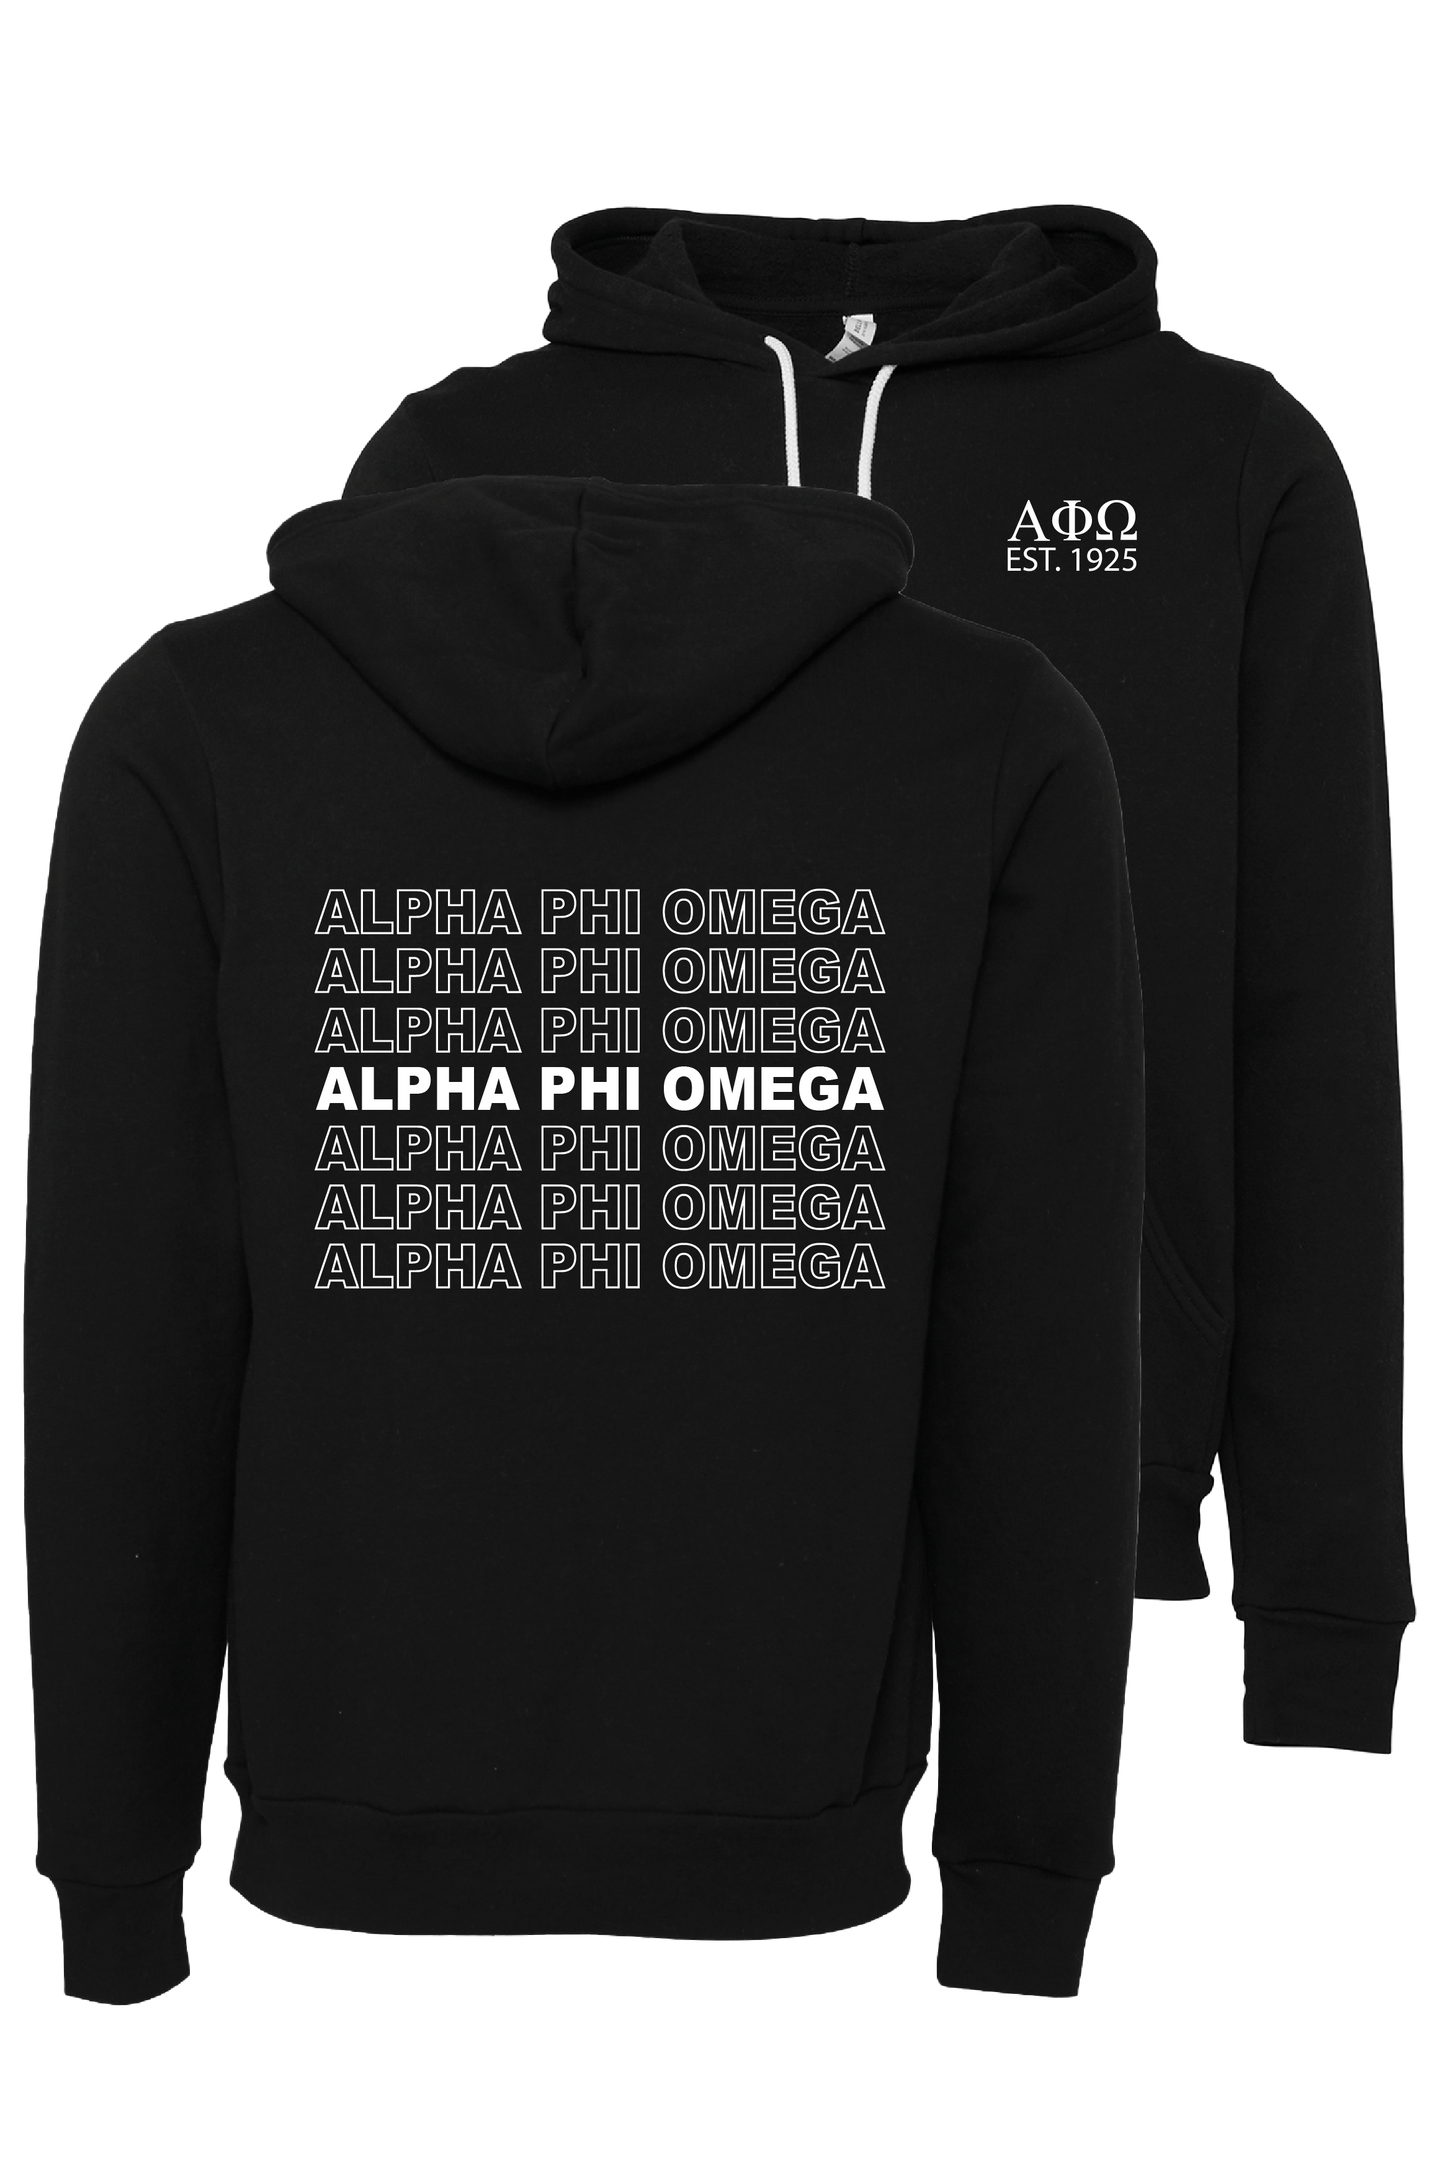 Alpha Phi Omega Repeating Name Hooded Sweatshirts